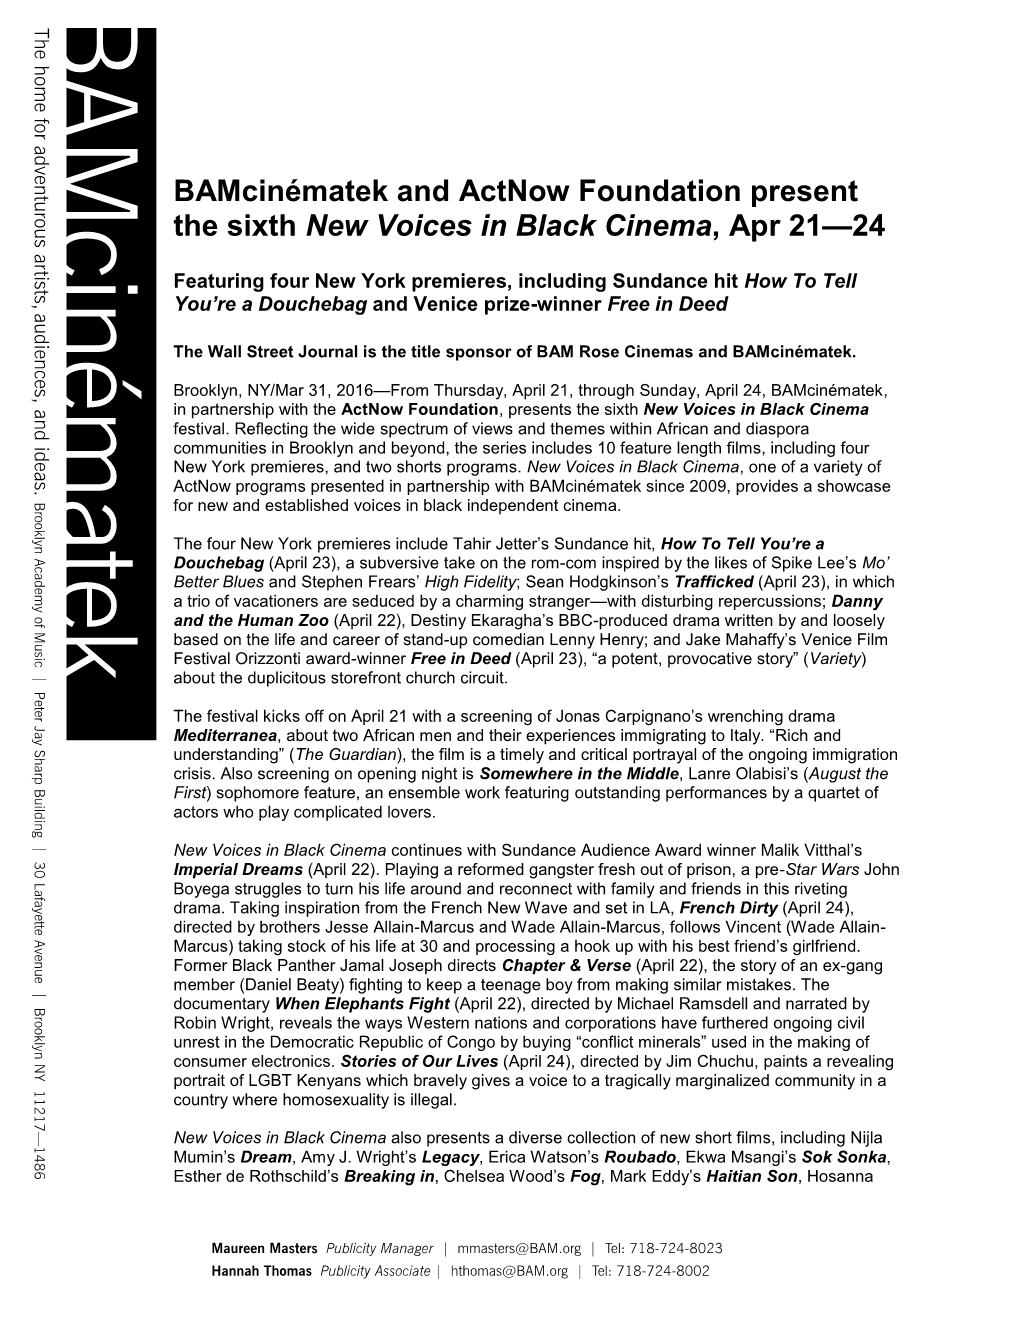 Bamcinématek and Actnow Foundation Present the Sixth New Voices in Black Cinema, Apr 21—24